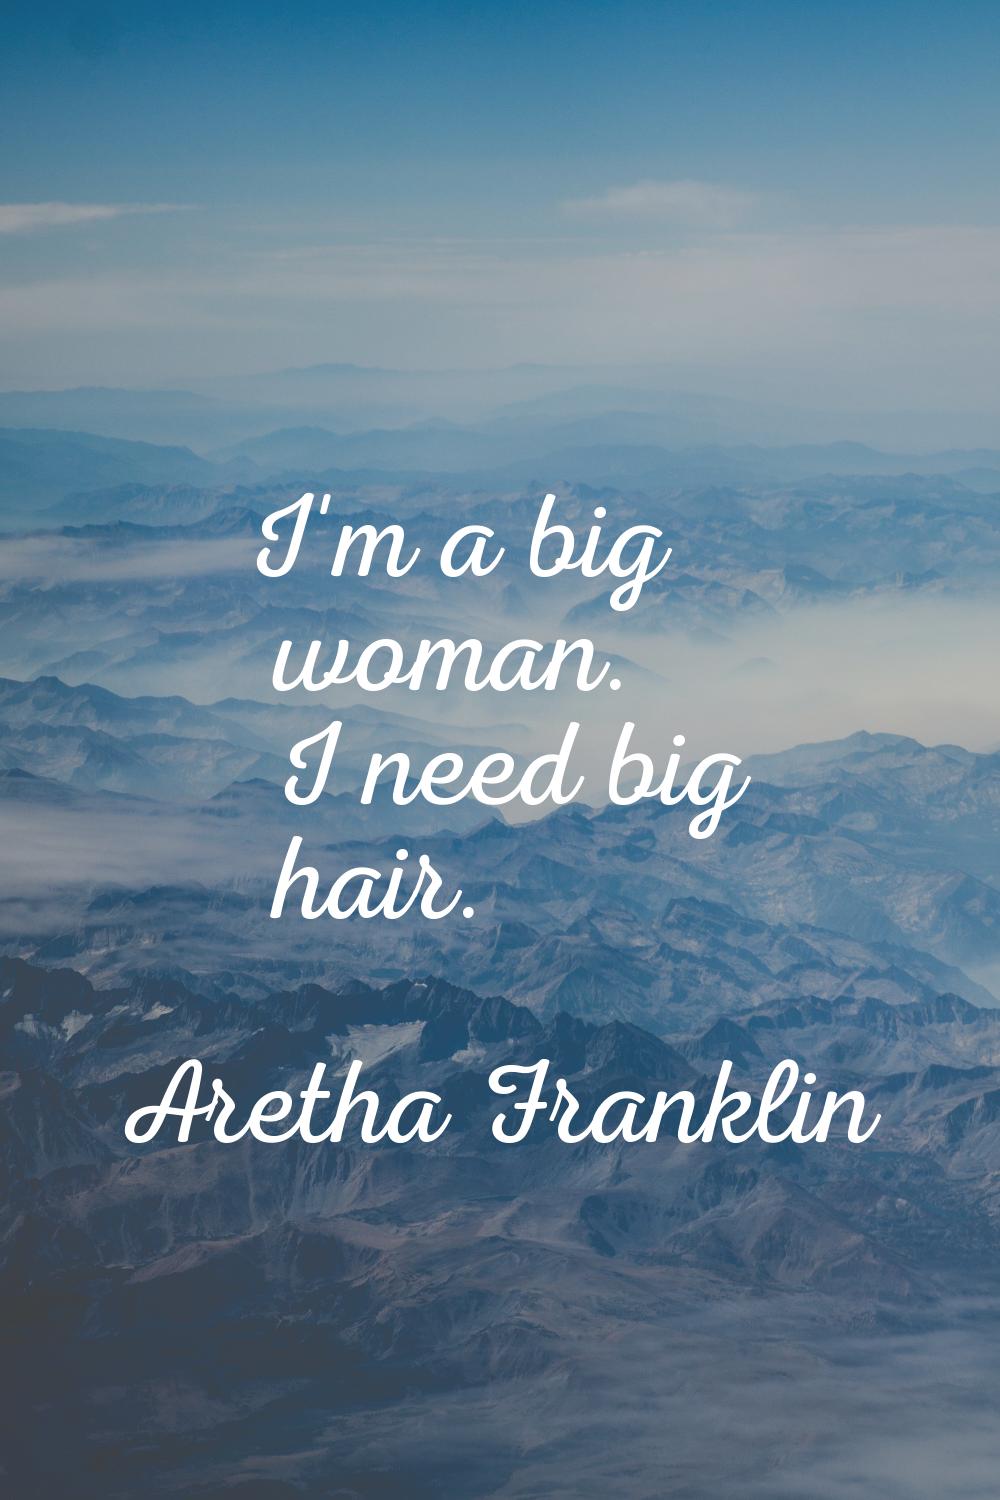 I'm a big woman. I need big hair.